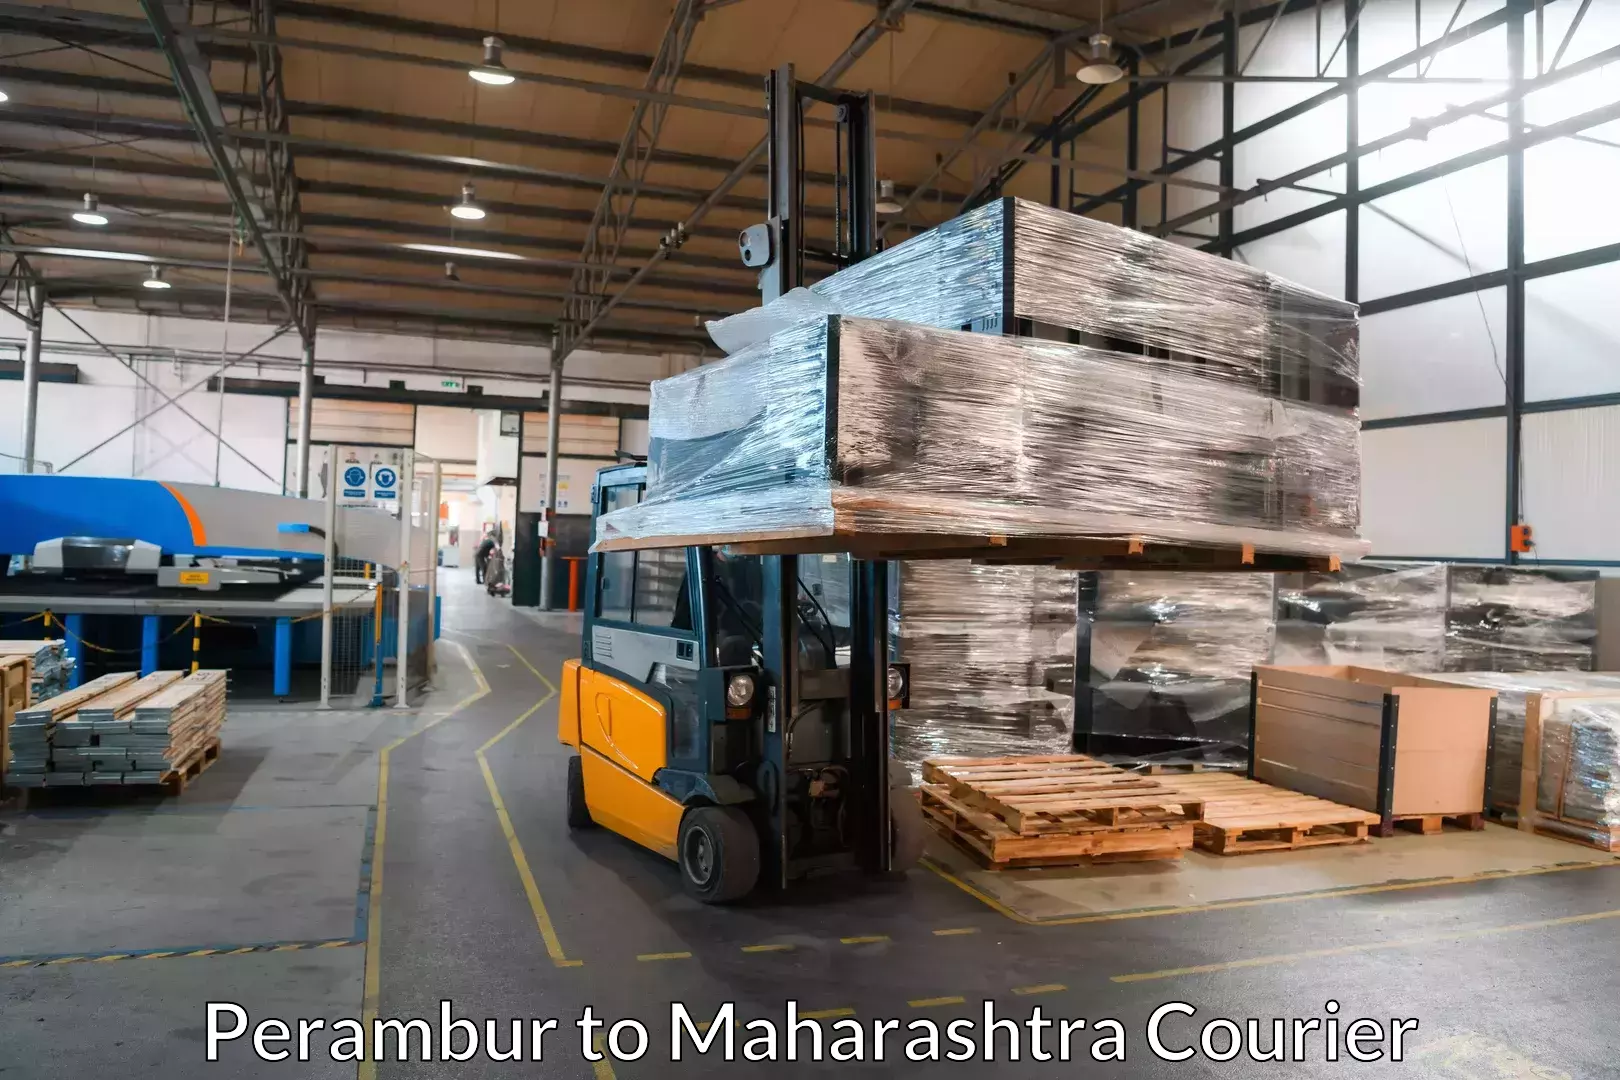 Quality moving company in Perambur to Navi Mumbai